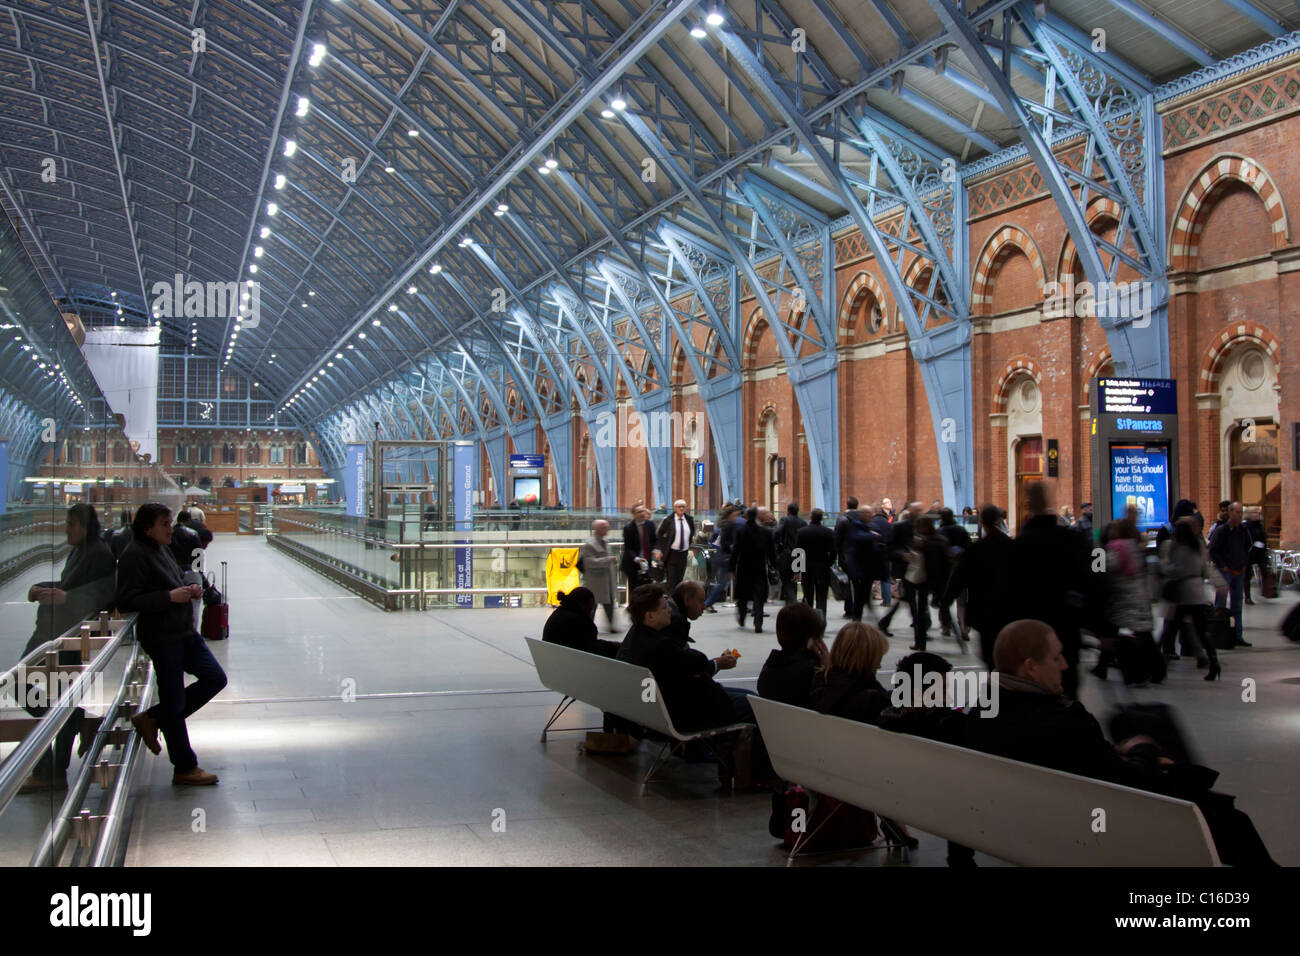 St Pancras International Railway Station - London Stock Photo